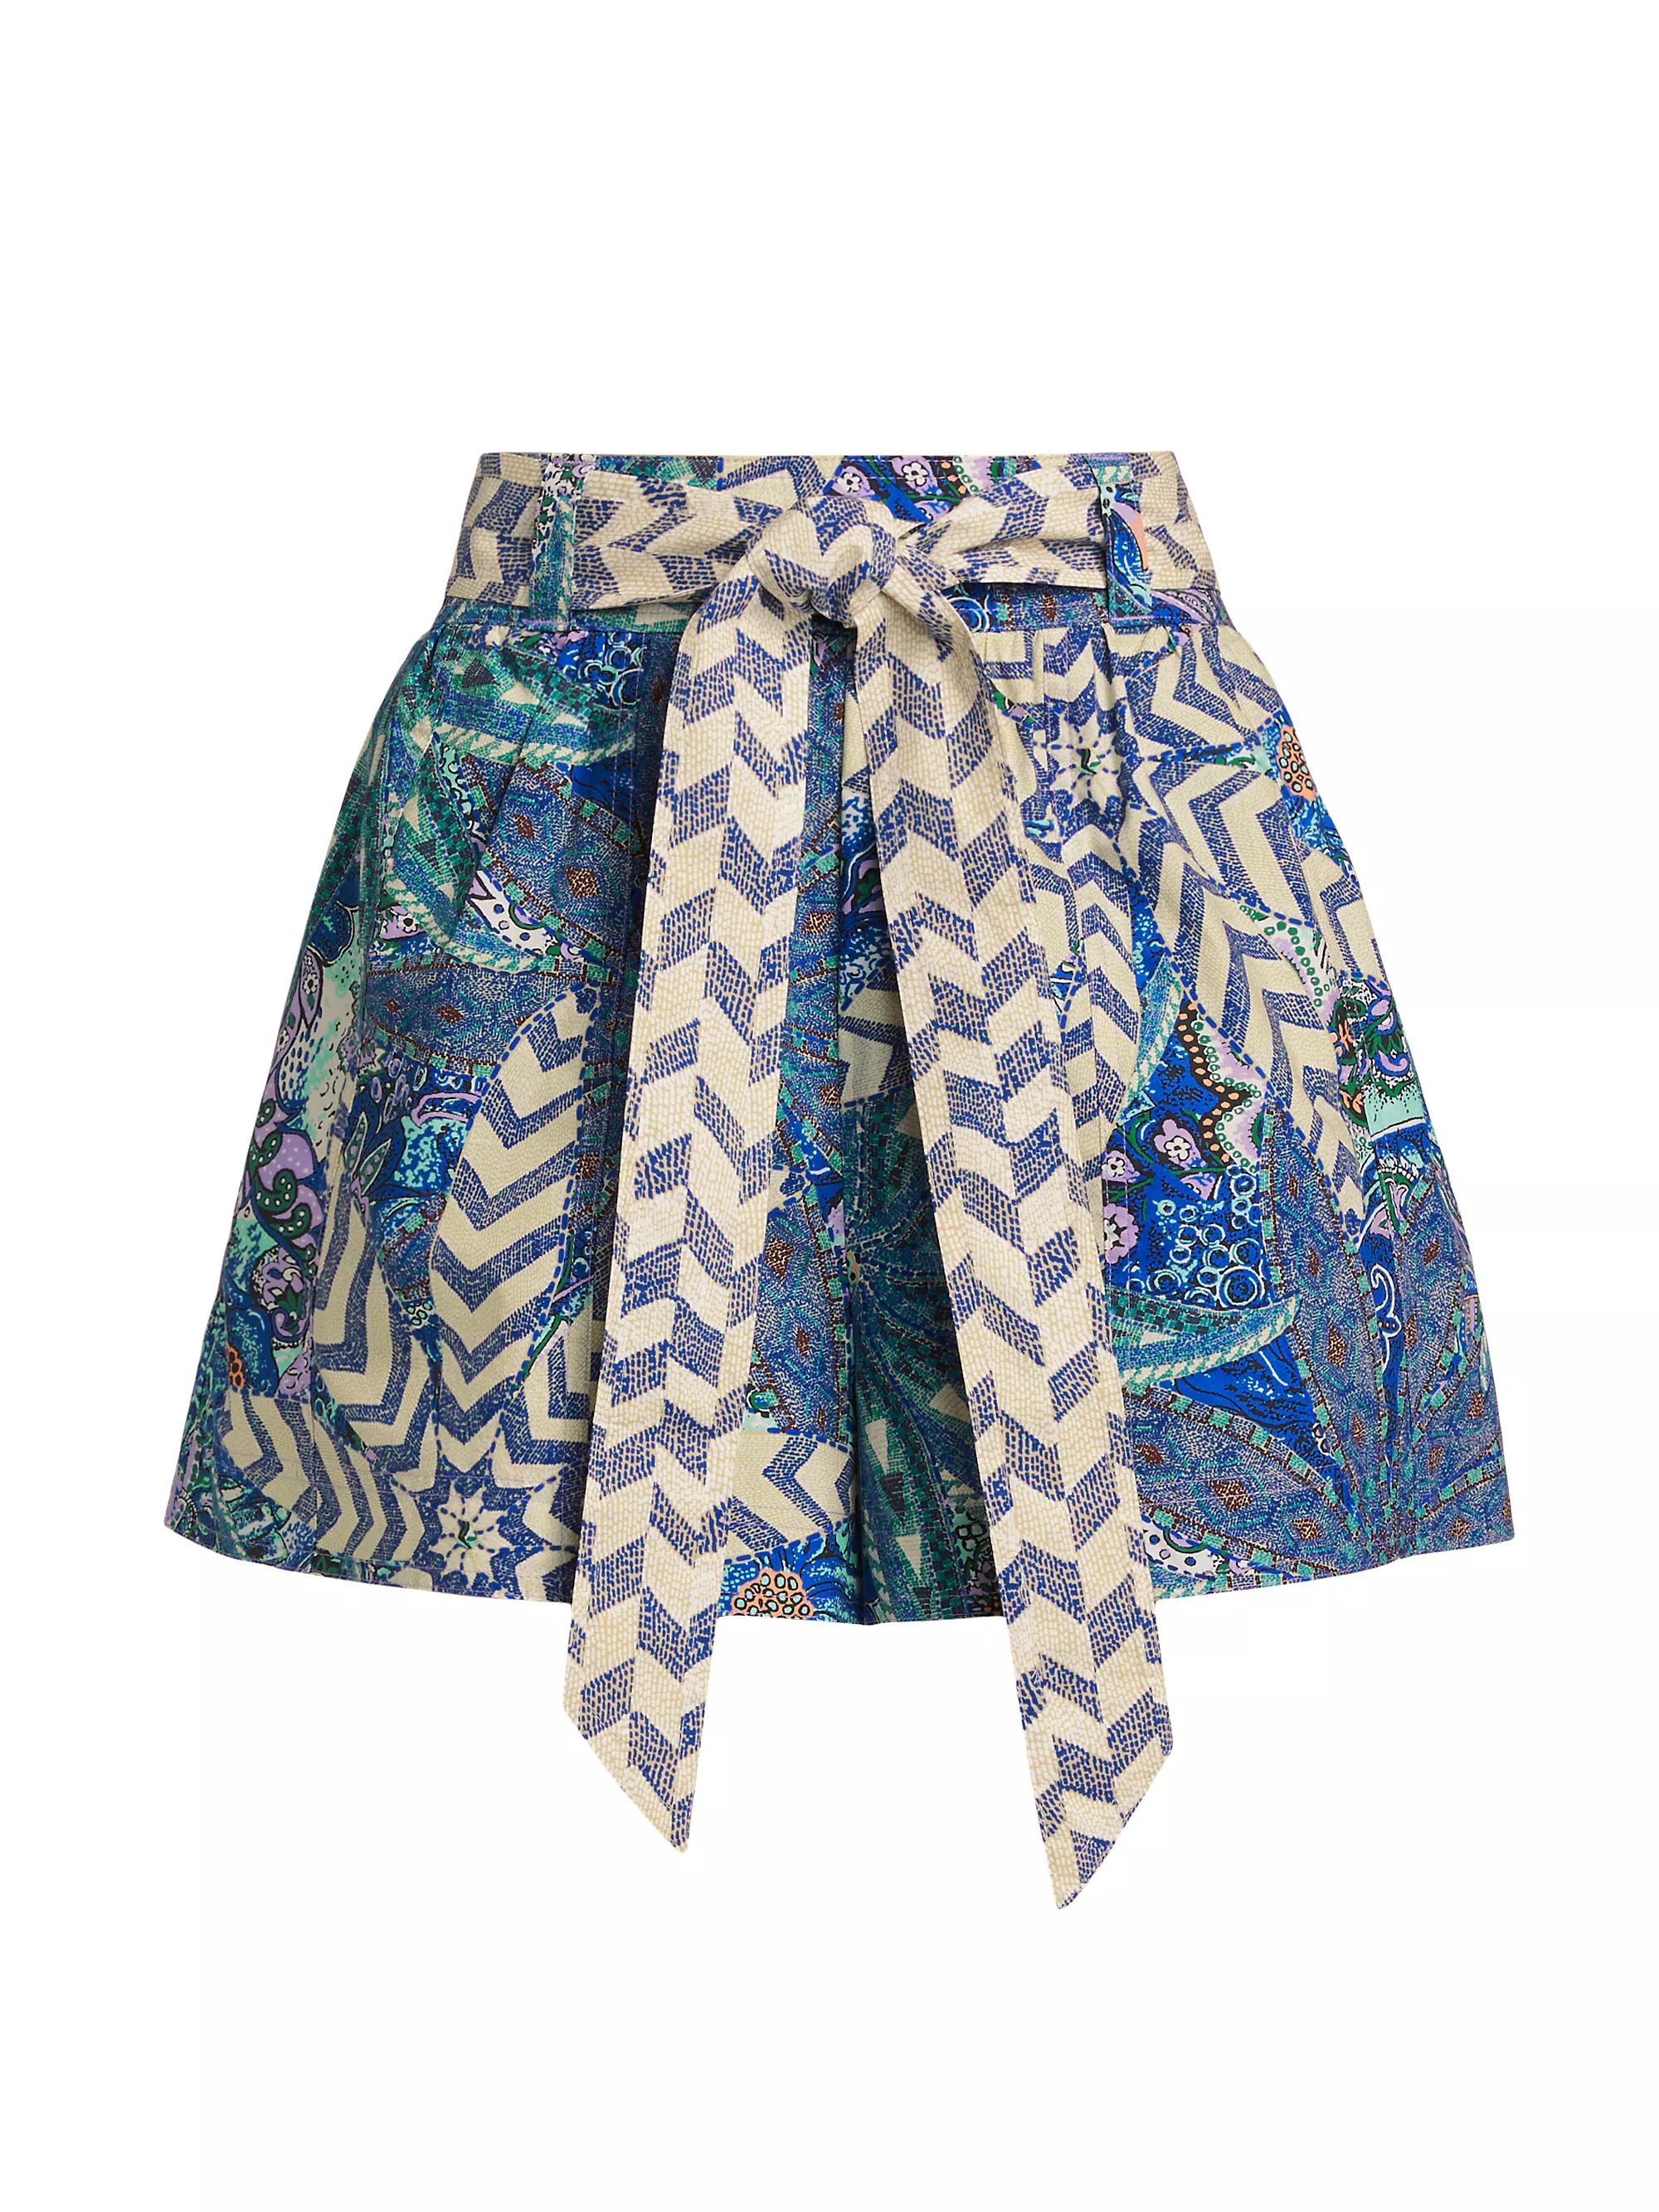 Shop Marie Oliver Tedi Floral Paisley Tie-Waist Shorts | Saks Fifth Avenue | Saks Fifth Avenue